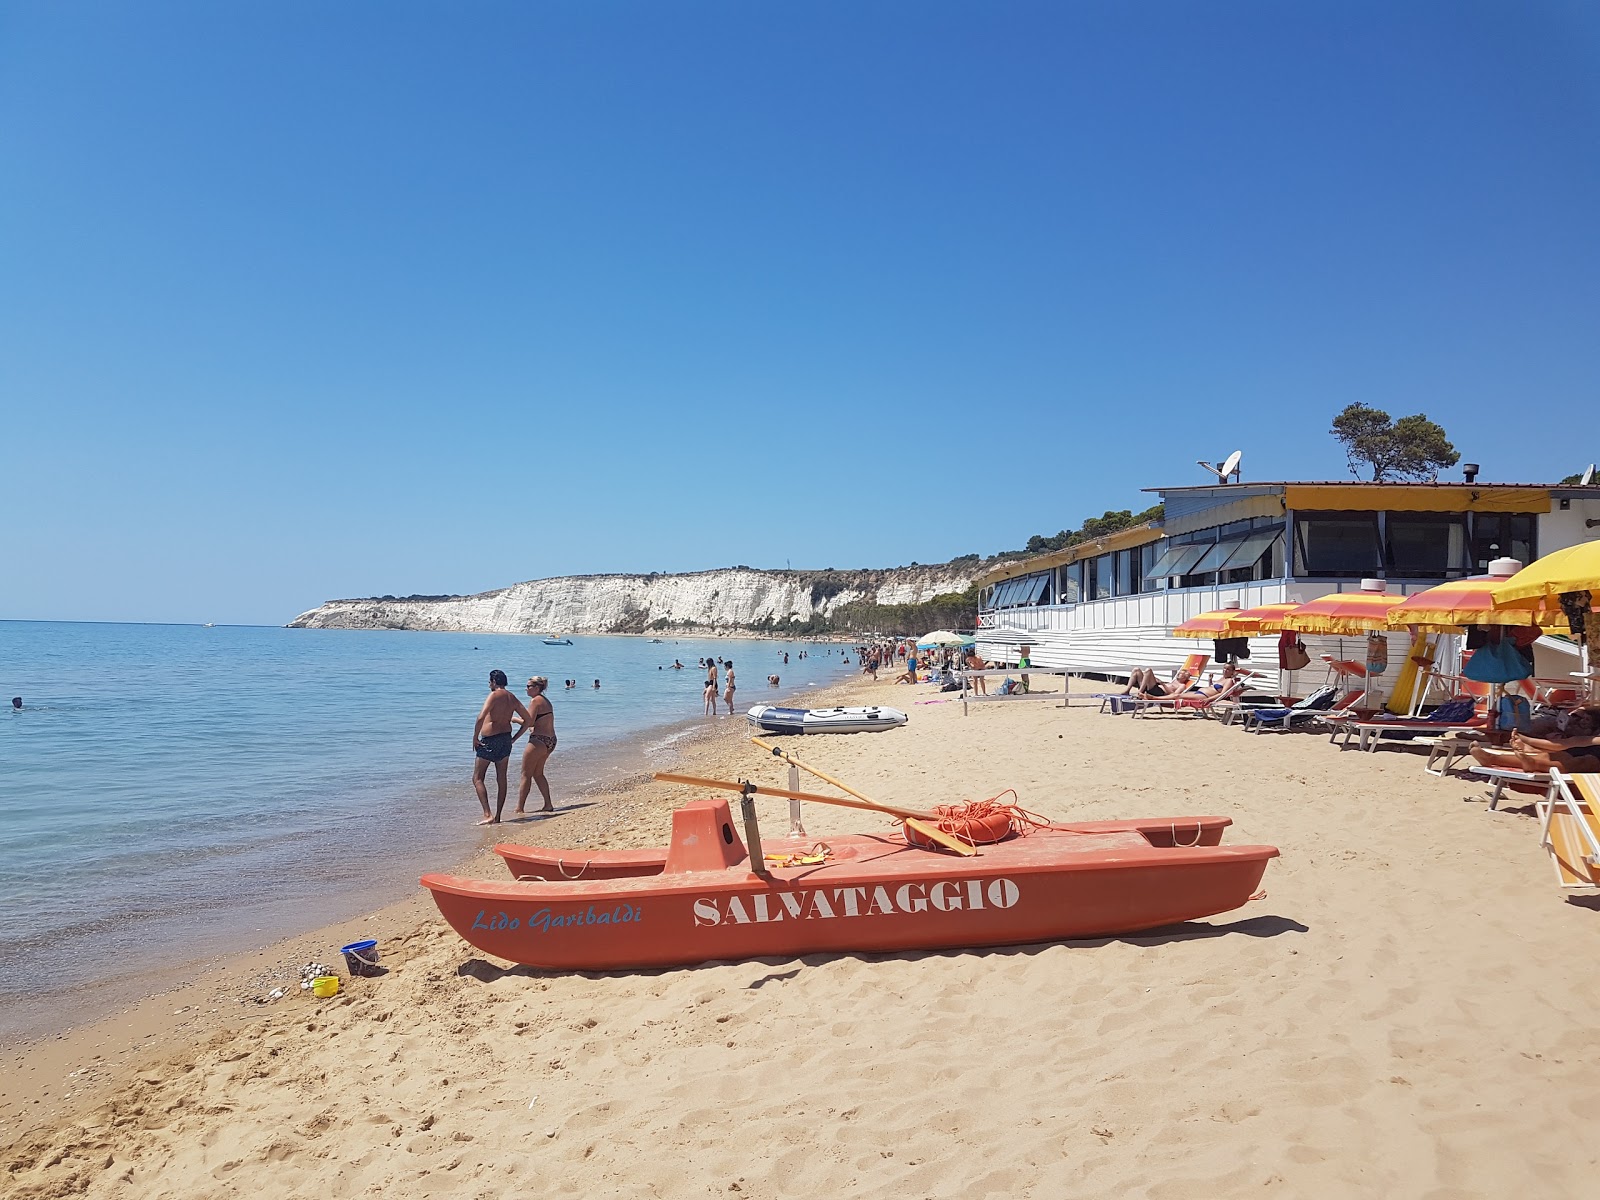 Foto de Spiaggia Di Eraclea Minoa ubicado en área natural